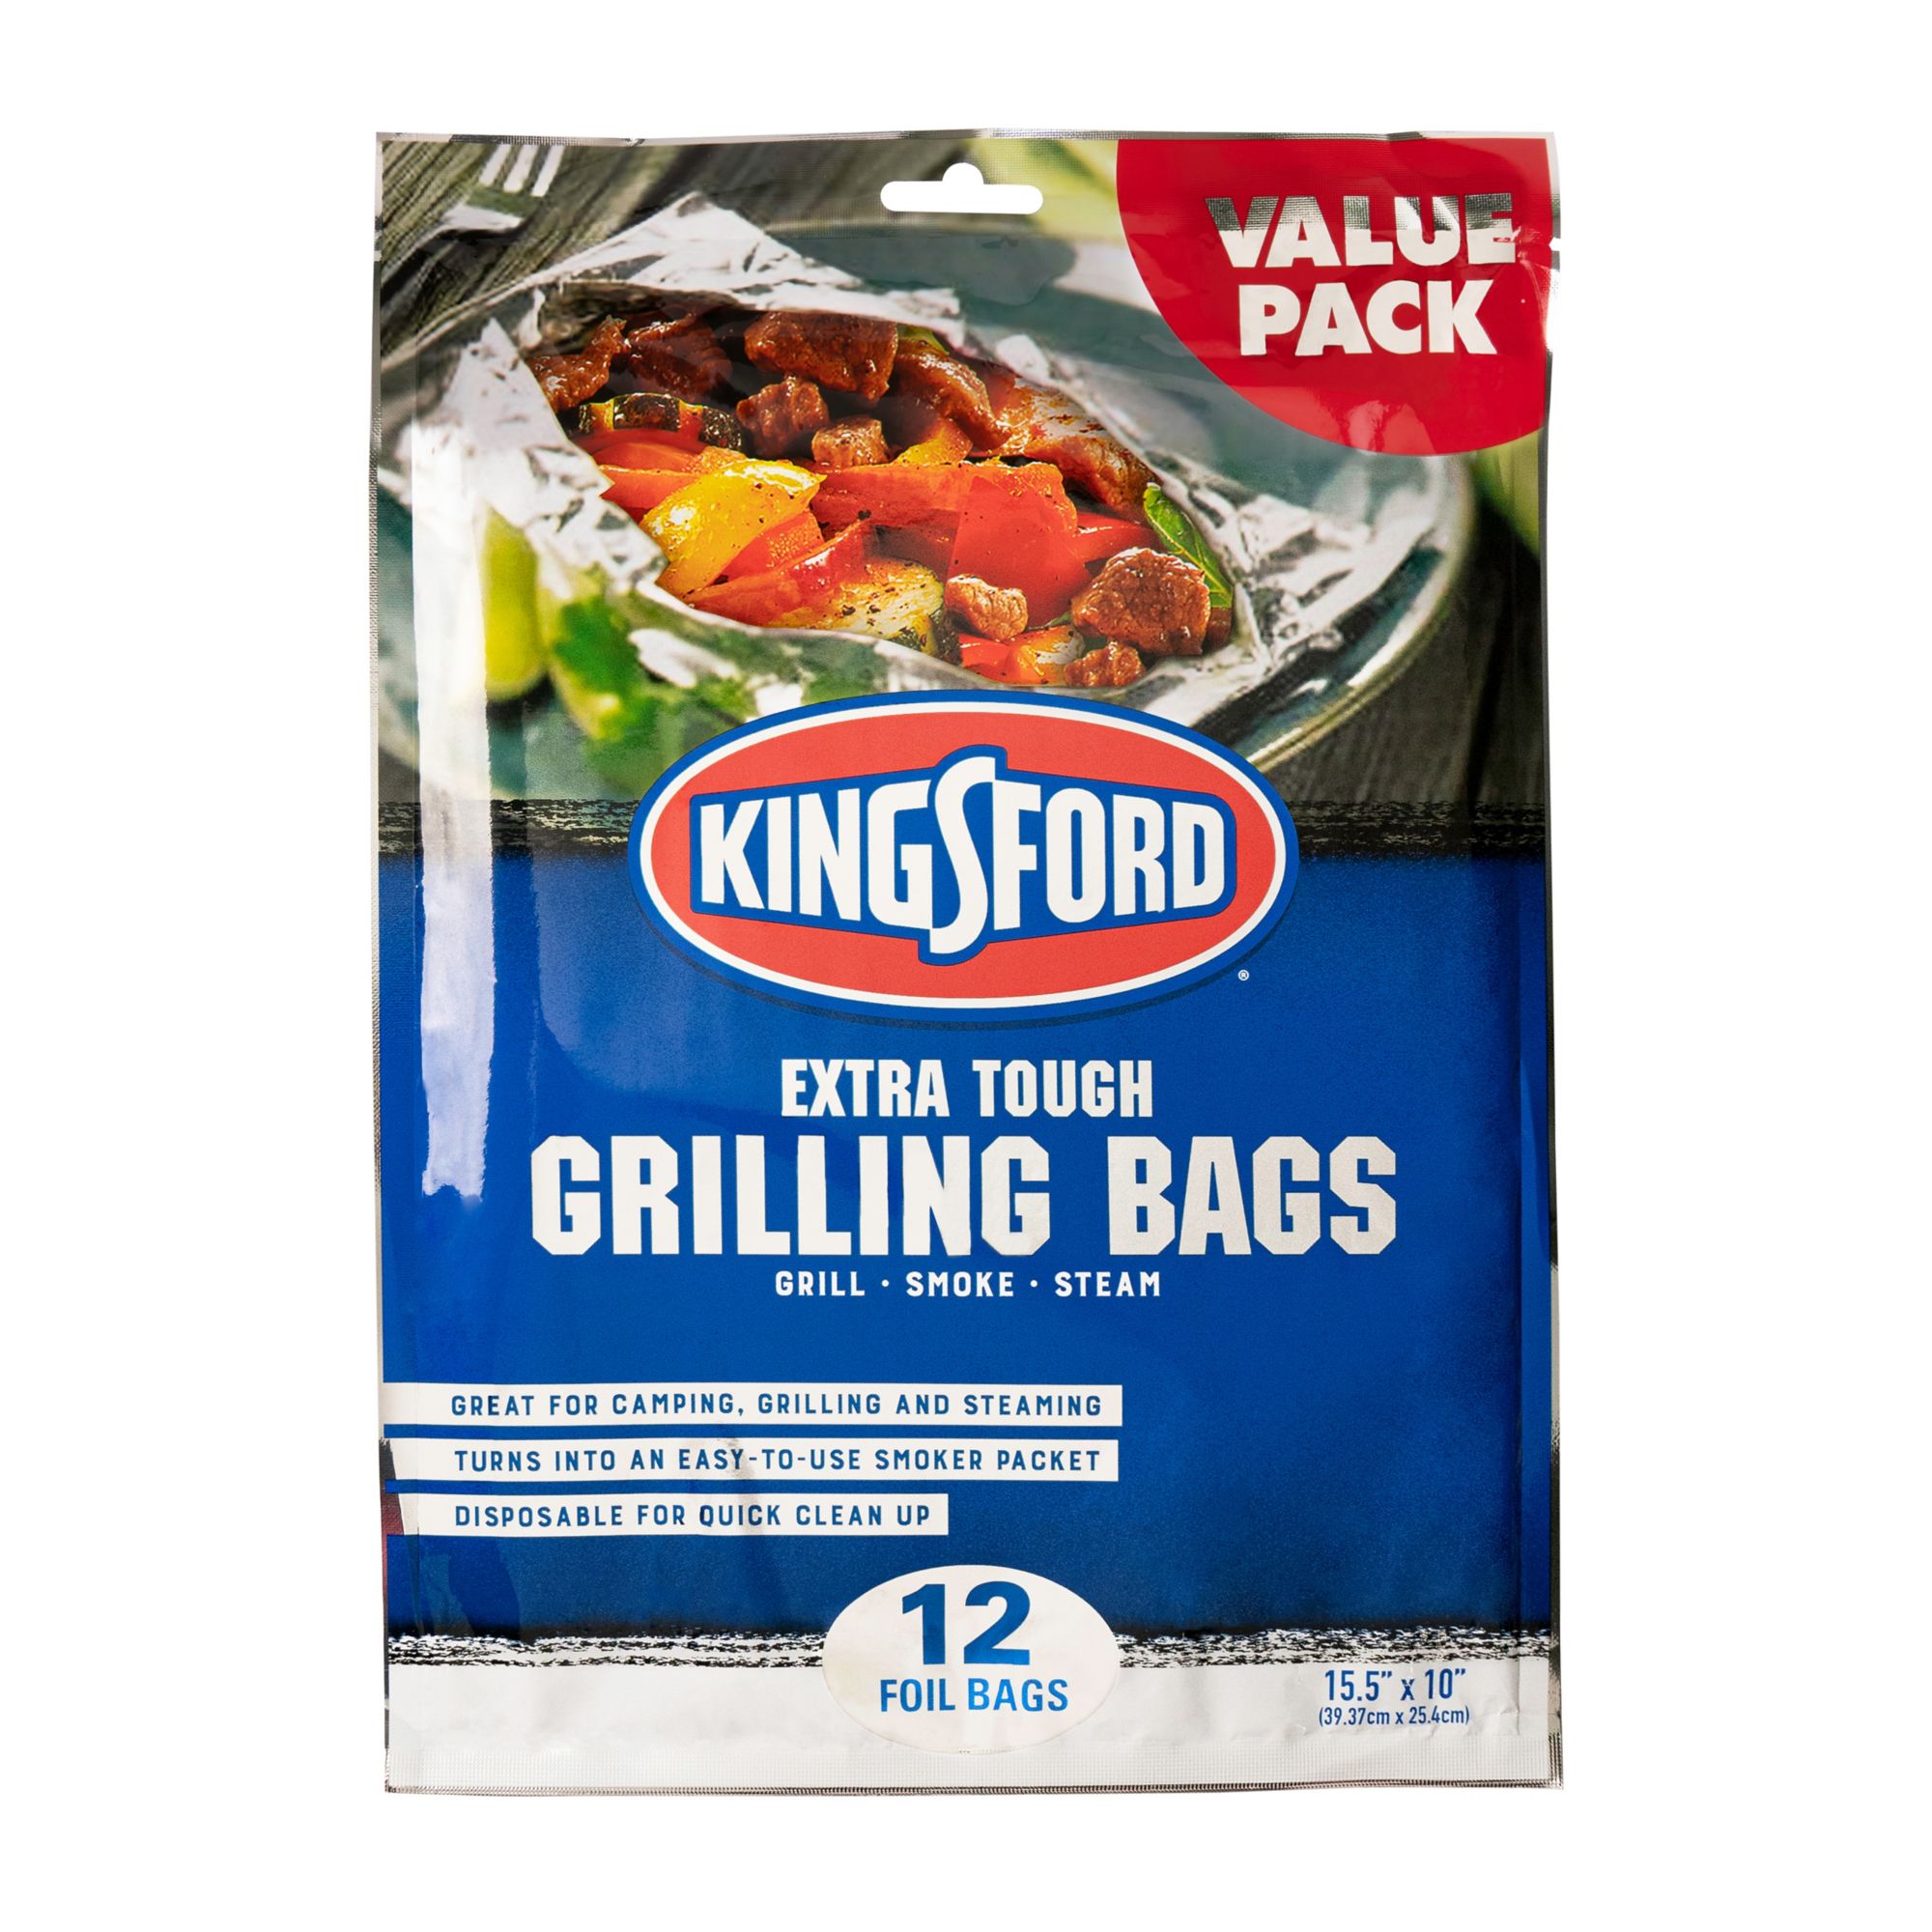 Kingsford Grilling Foil, Aluminum, Non Stick, Heavy Duty, Food Wraps